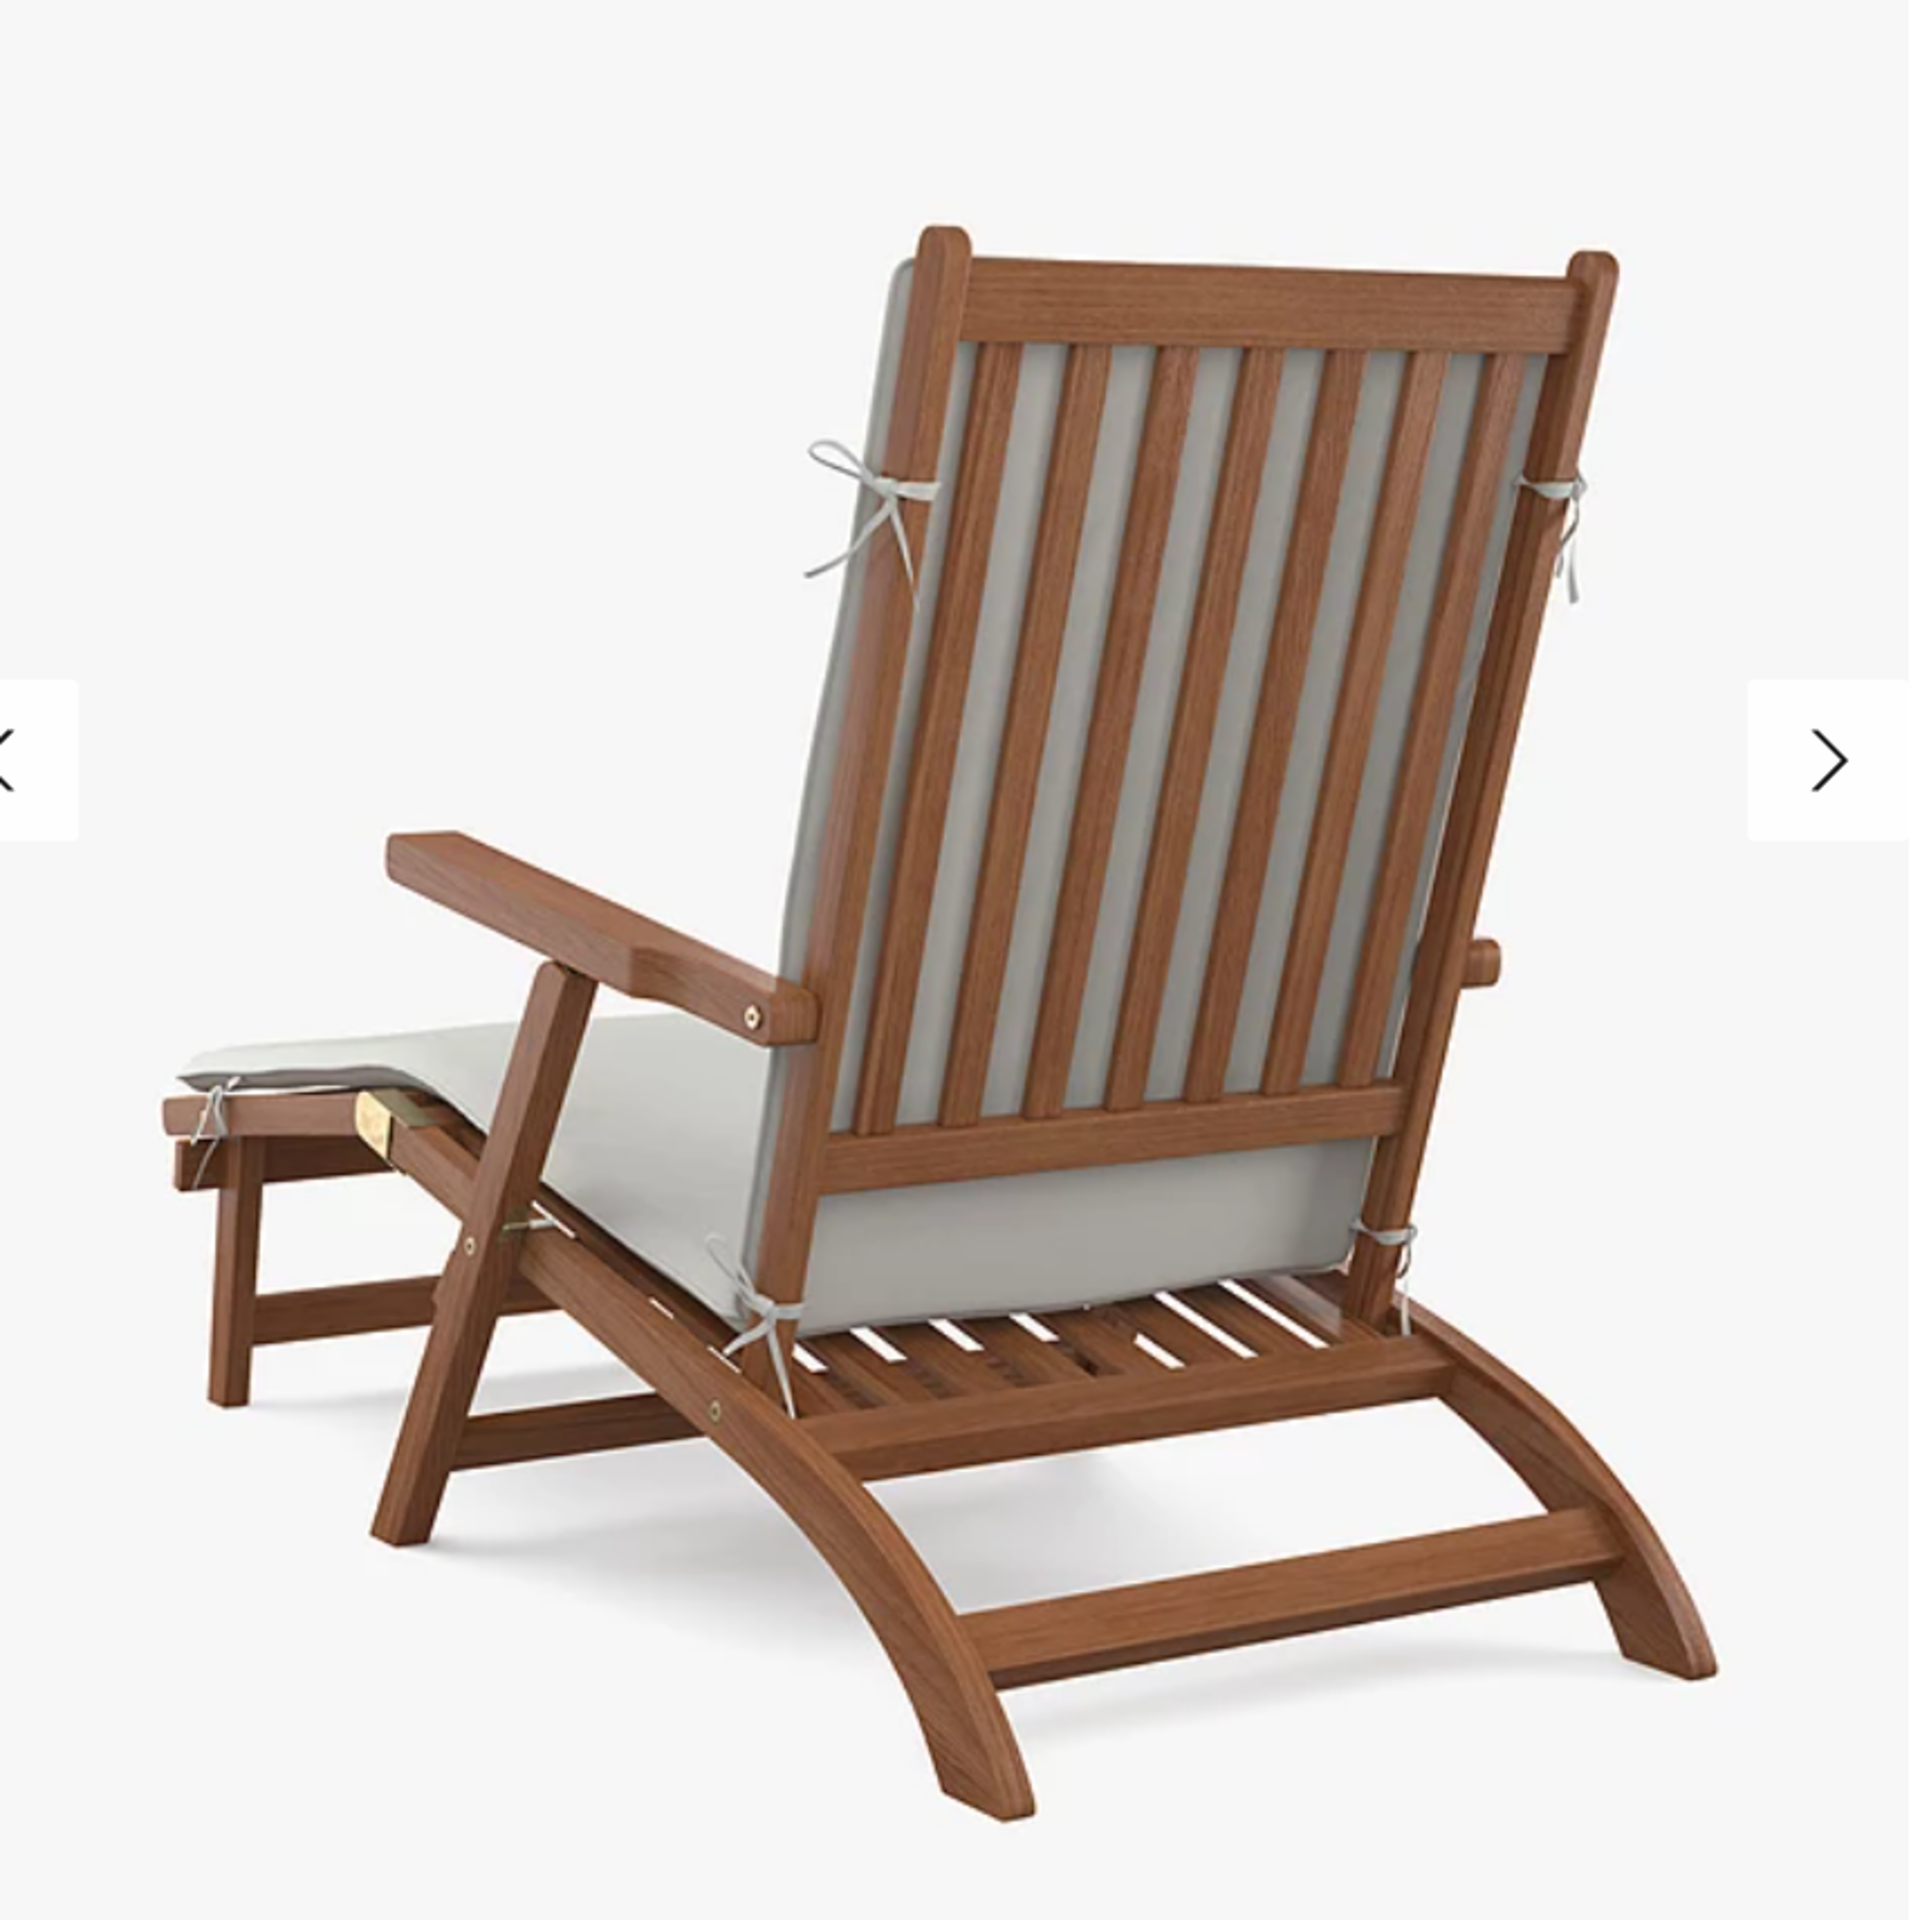 2 x New & Boxed John Lewis Cove Garden Steamer Chair, FSC-Certified (Eucalyptus Wood), Natural.